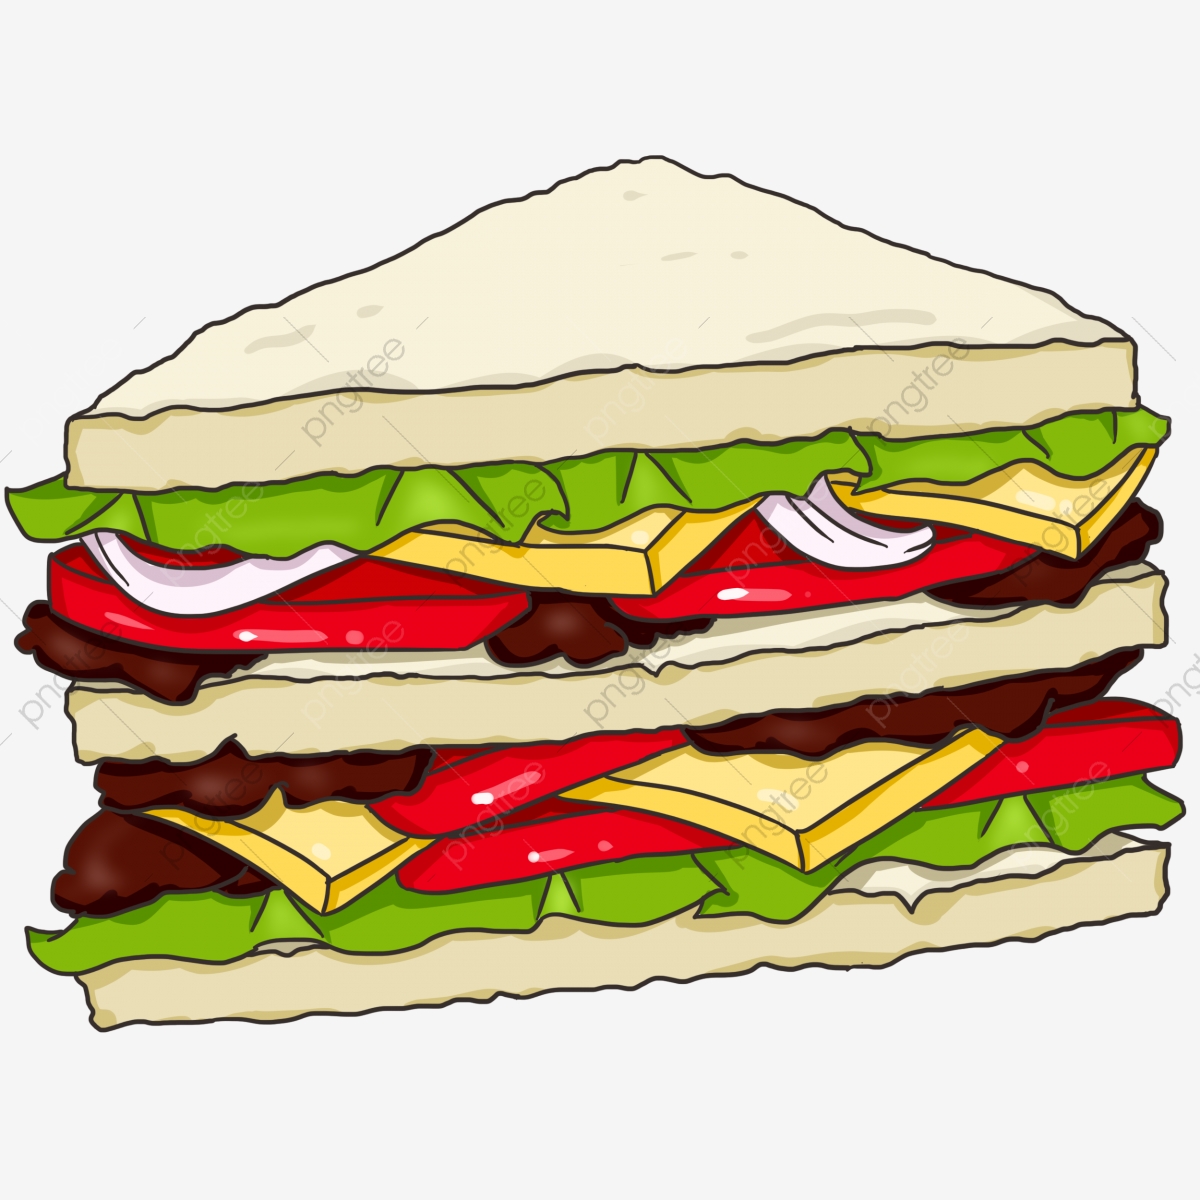 sandwich clipart triangle sandwich